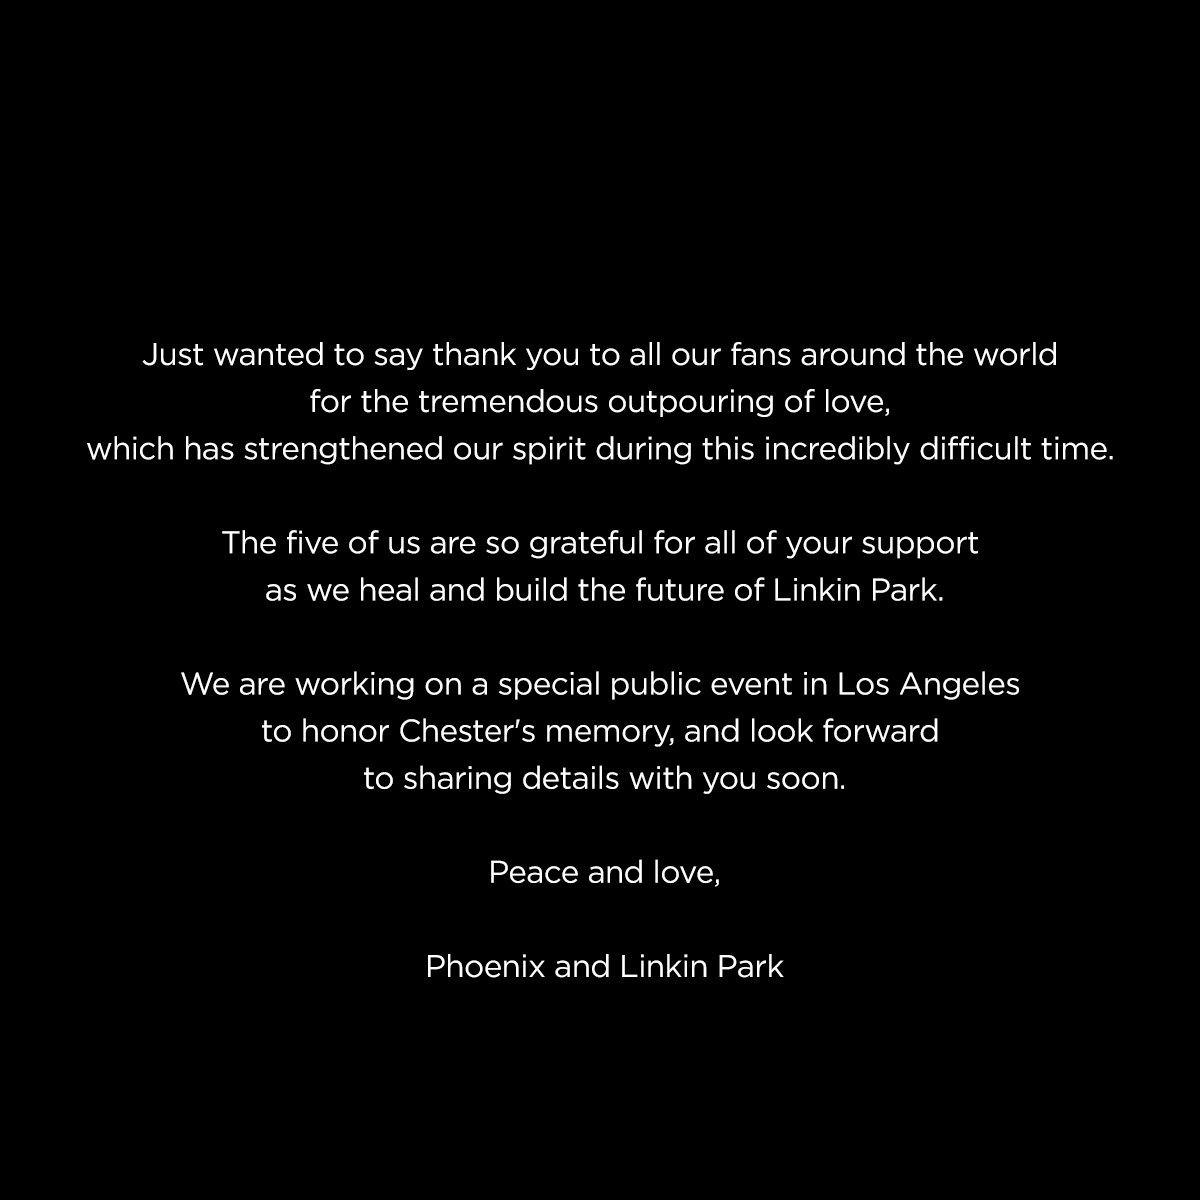 Linkin Park official statement